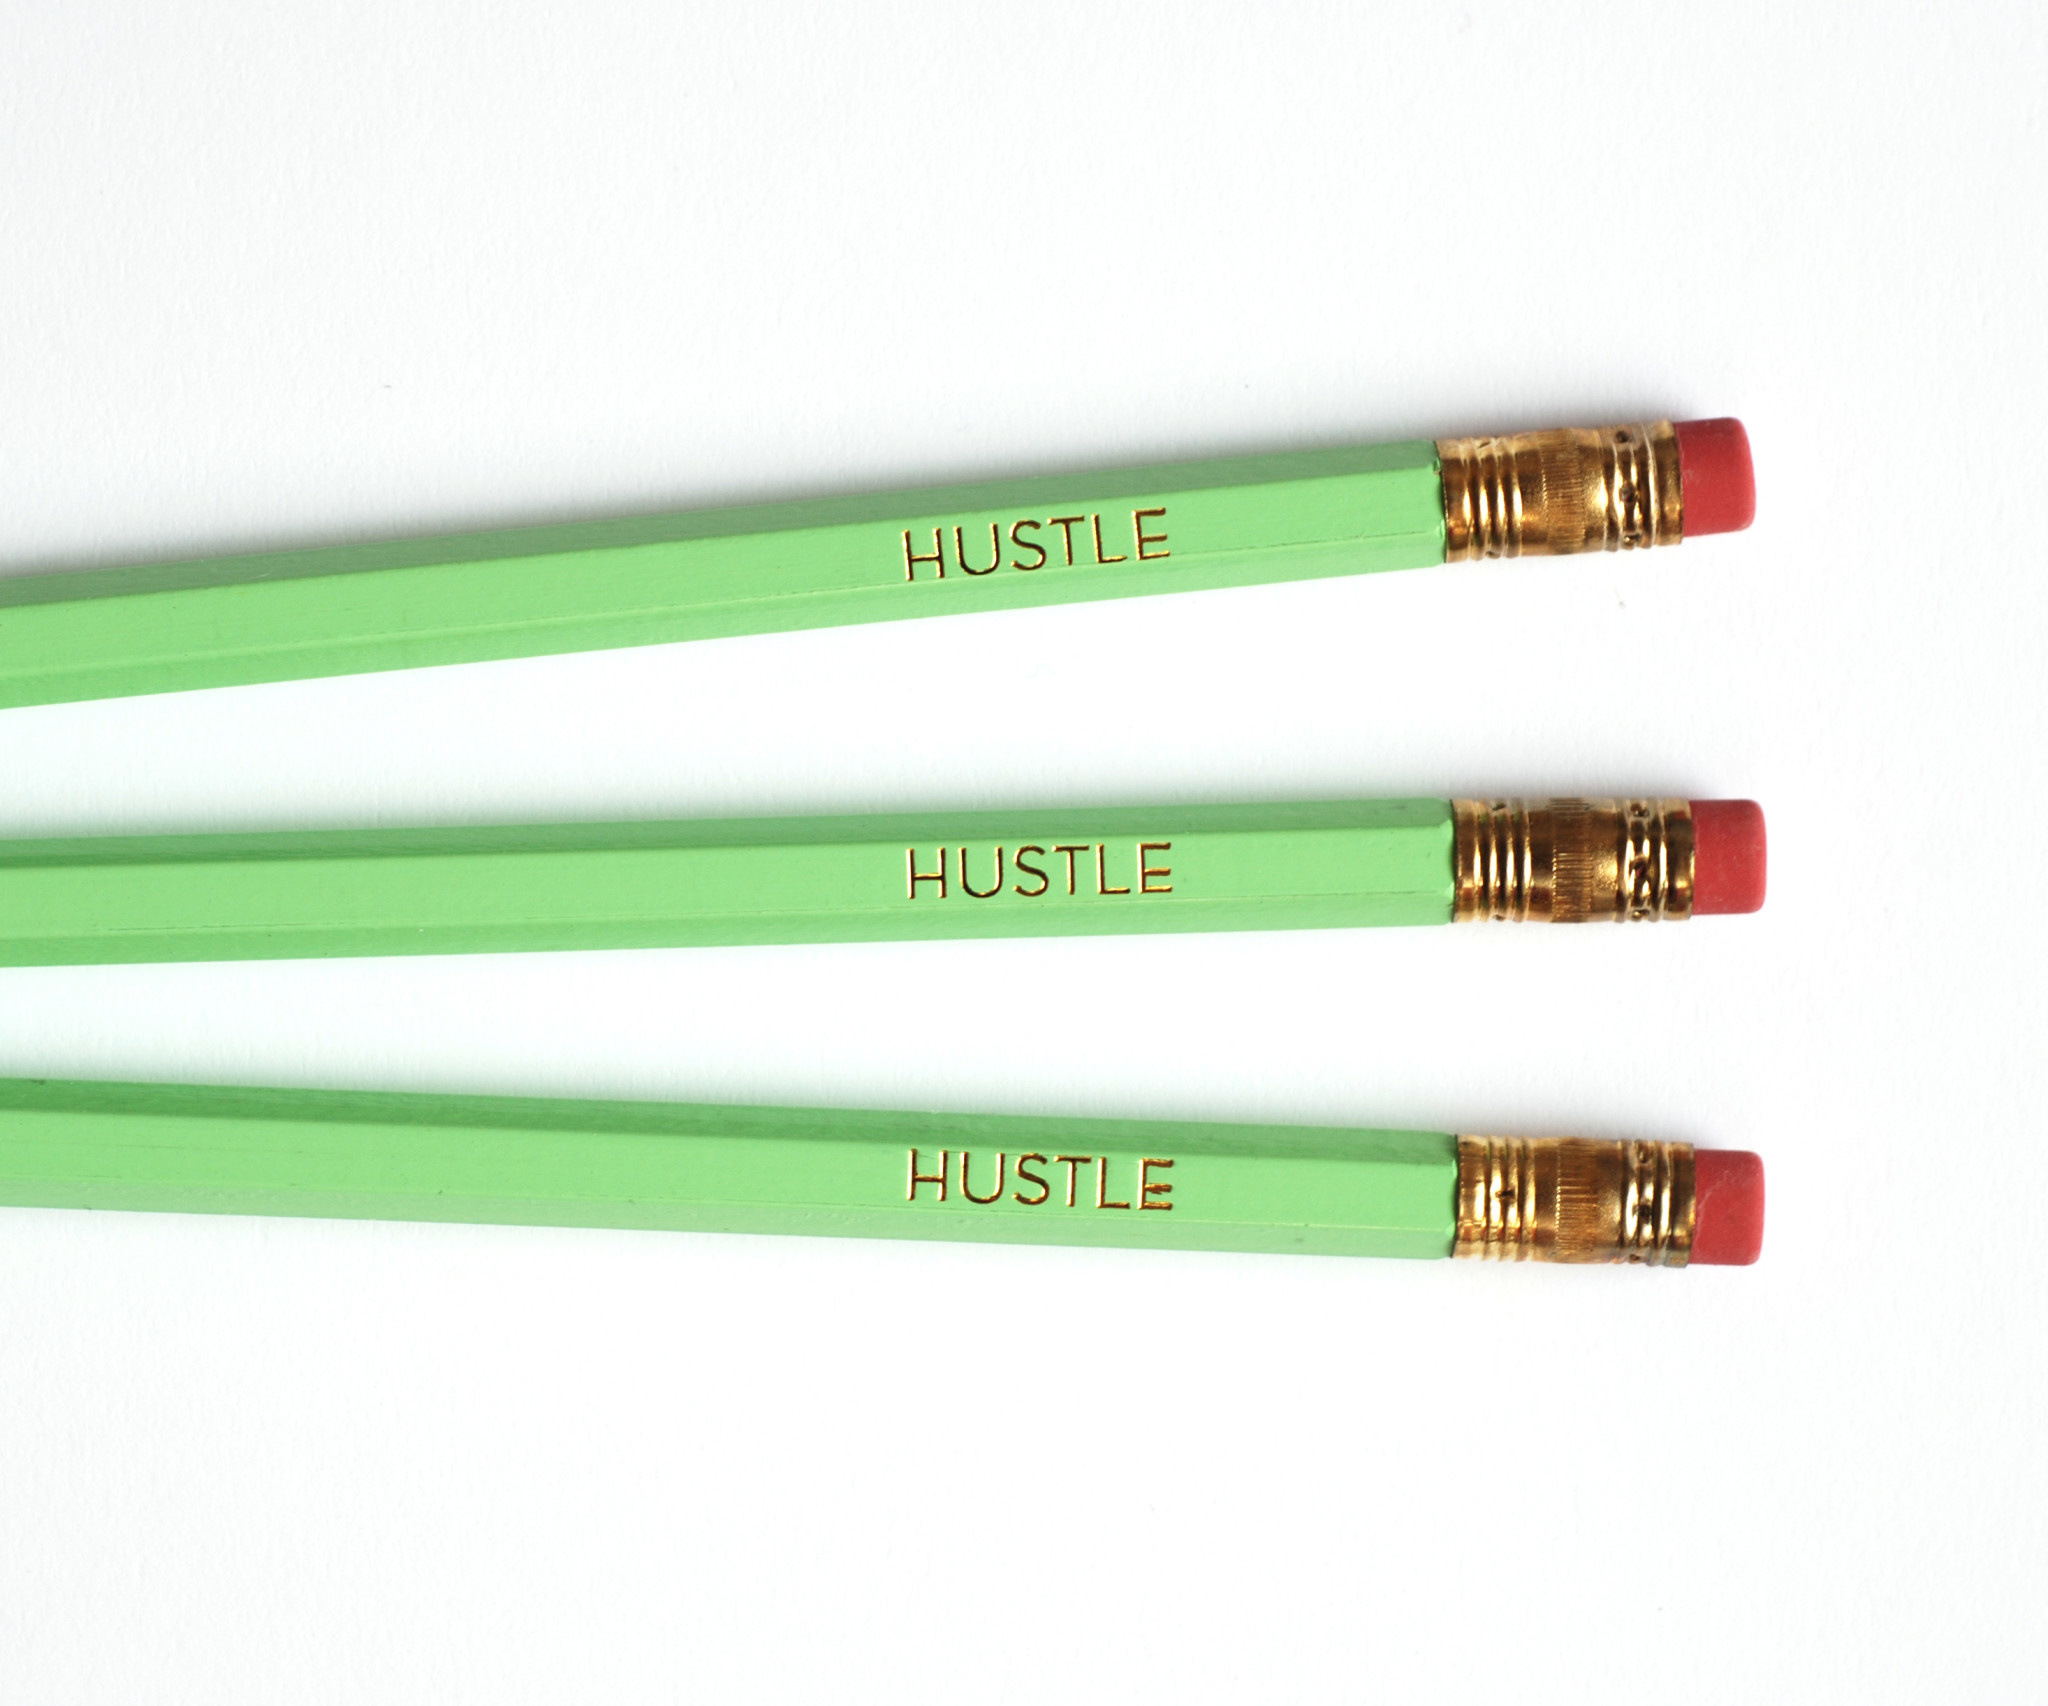 Row House 14 Hustle Pencil